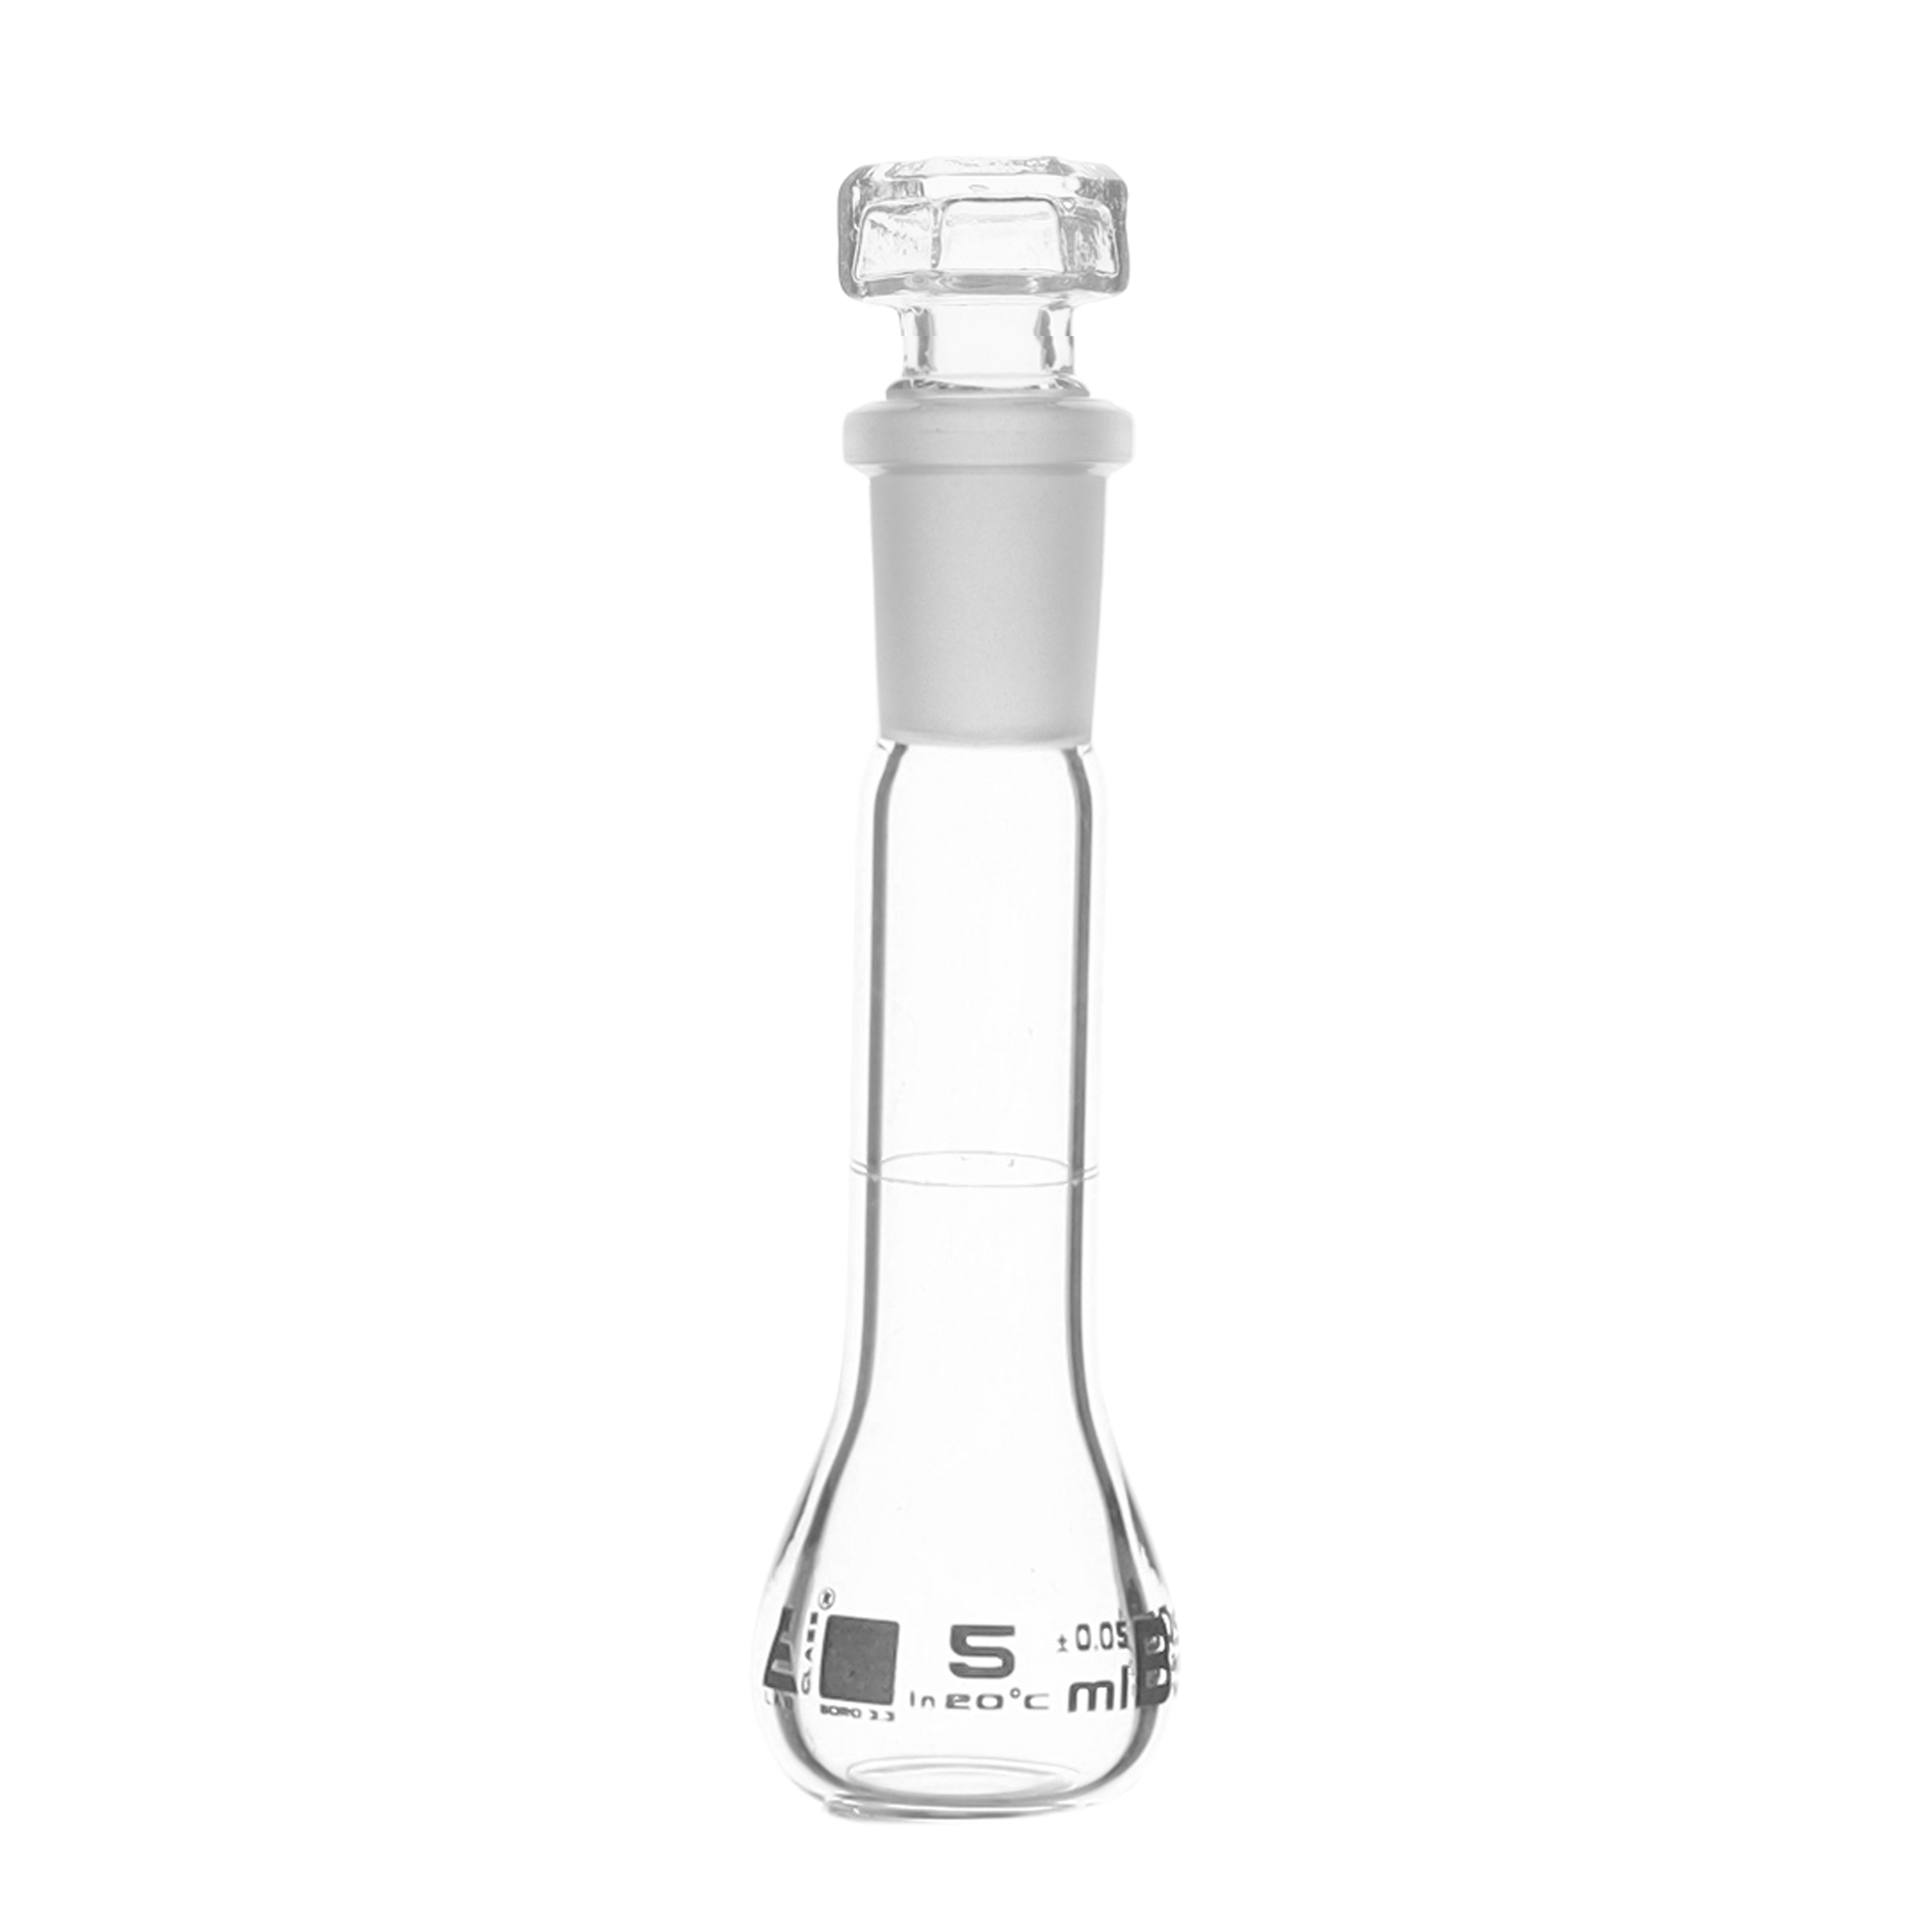 Borosilicate Volumetric Flask with Hollow Glass Stopper, 5ml, Class B, White Print, Autoclavable